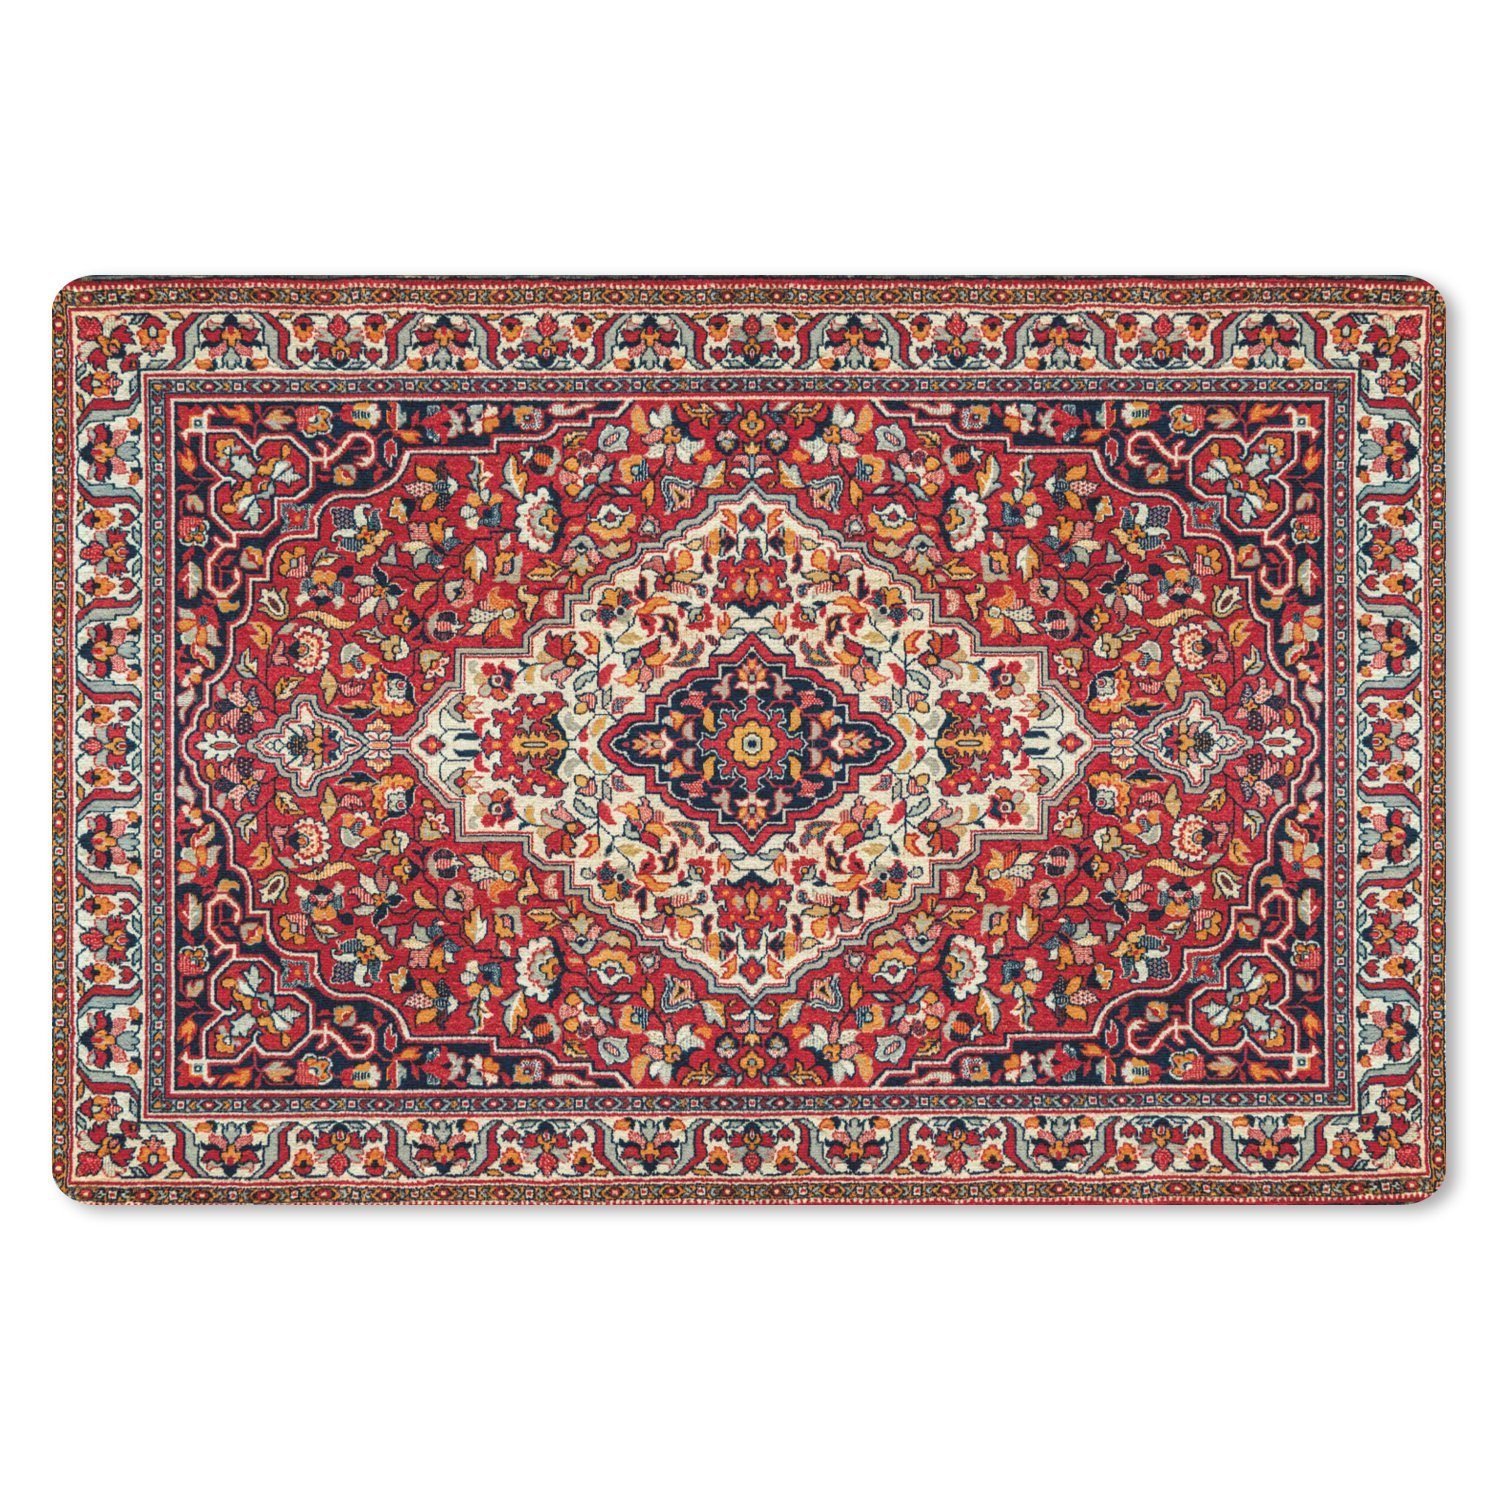 MuchoWow Mauspad Persische Teppiche - Teppiche - Muster - Rot (1-St), Gaming, Mousepad, Büro, 27x18 cm, Mausunterlage